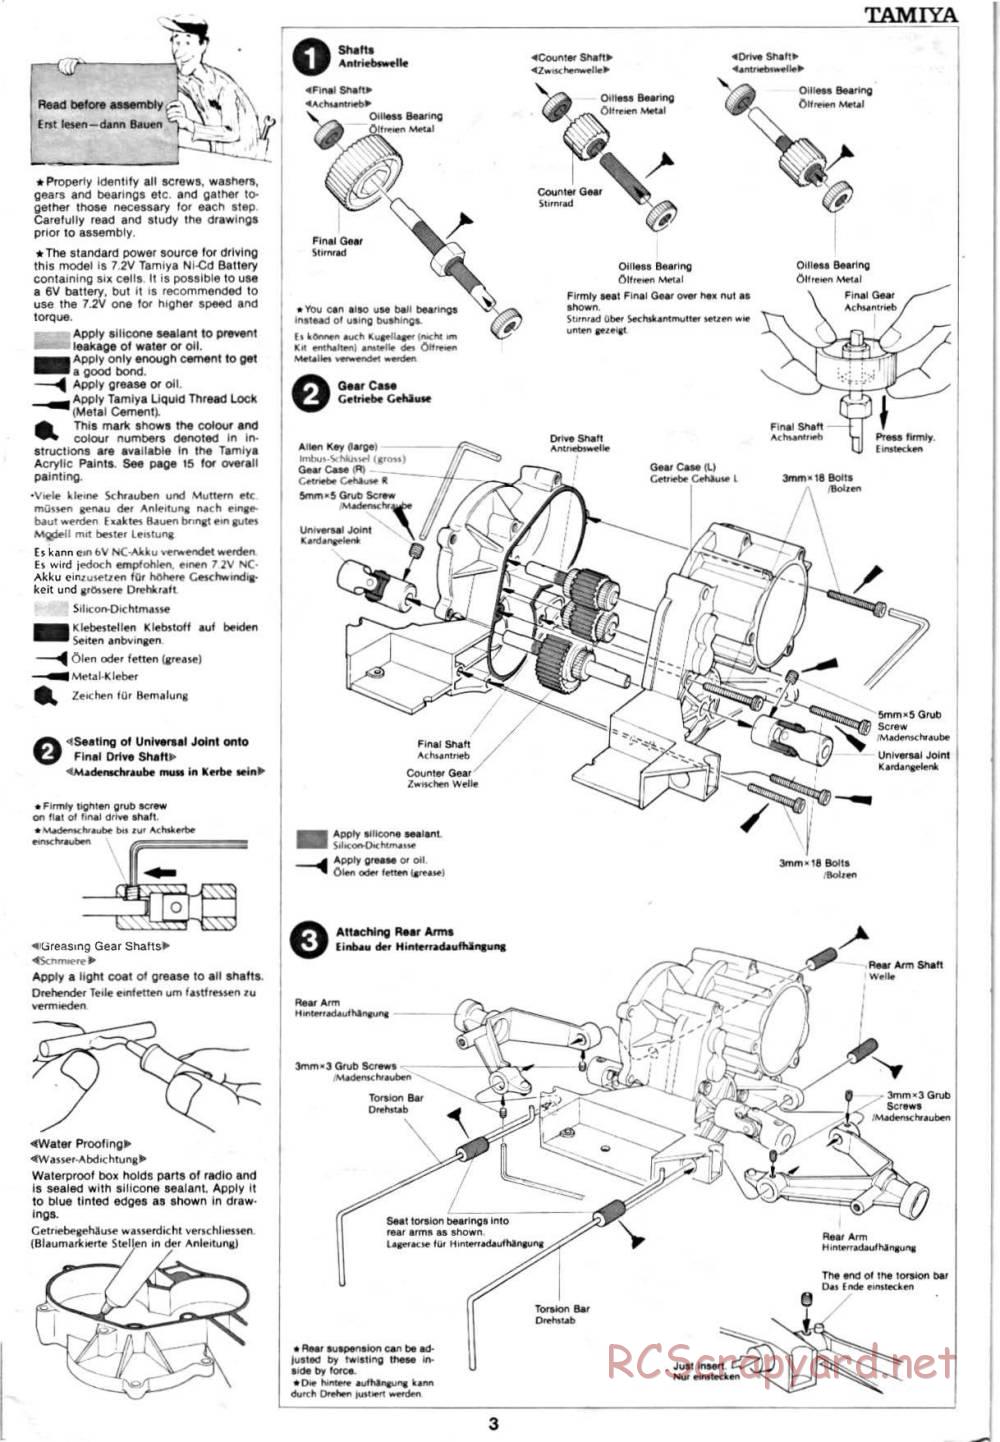 Tamiya - Ford F-150 Ranger XLT - 58027 - Manual - Page 3